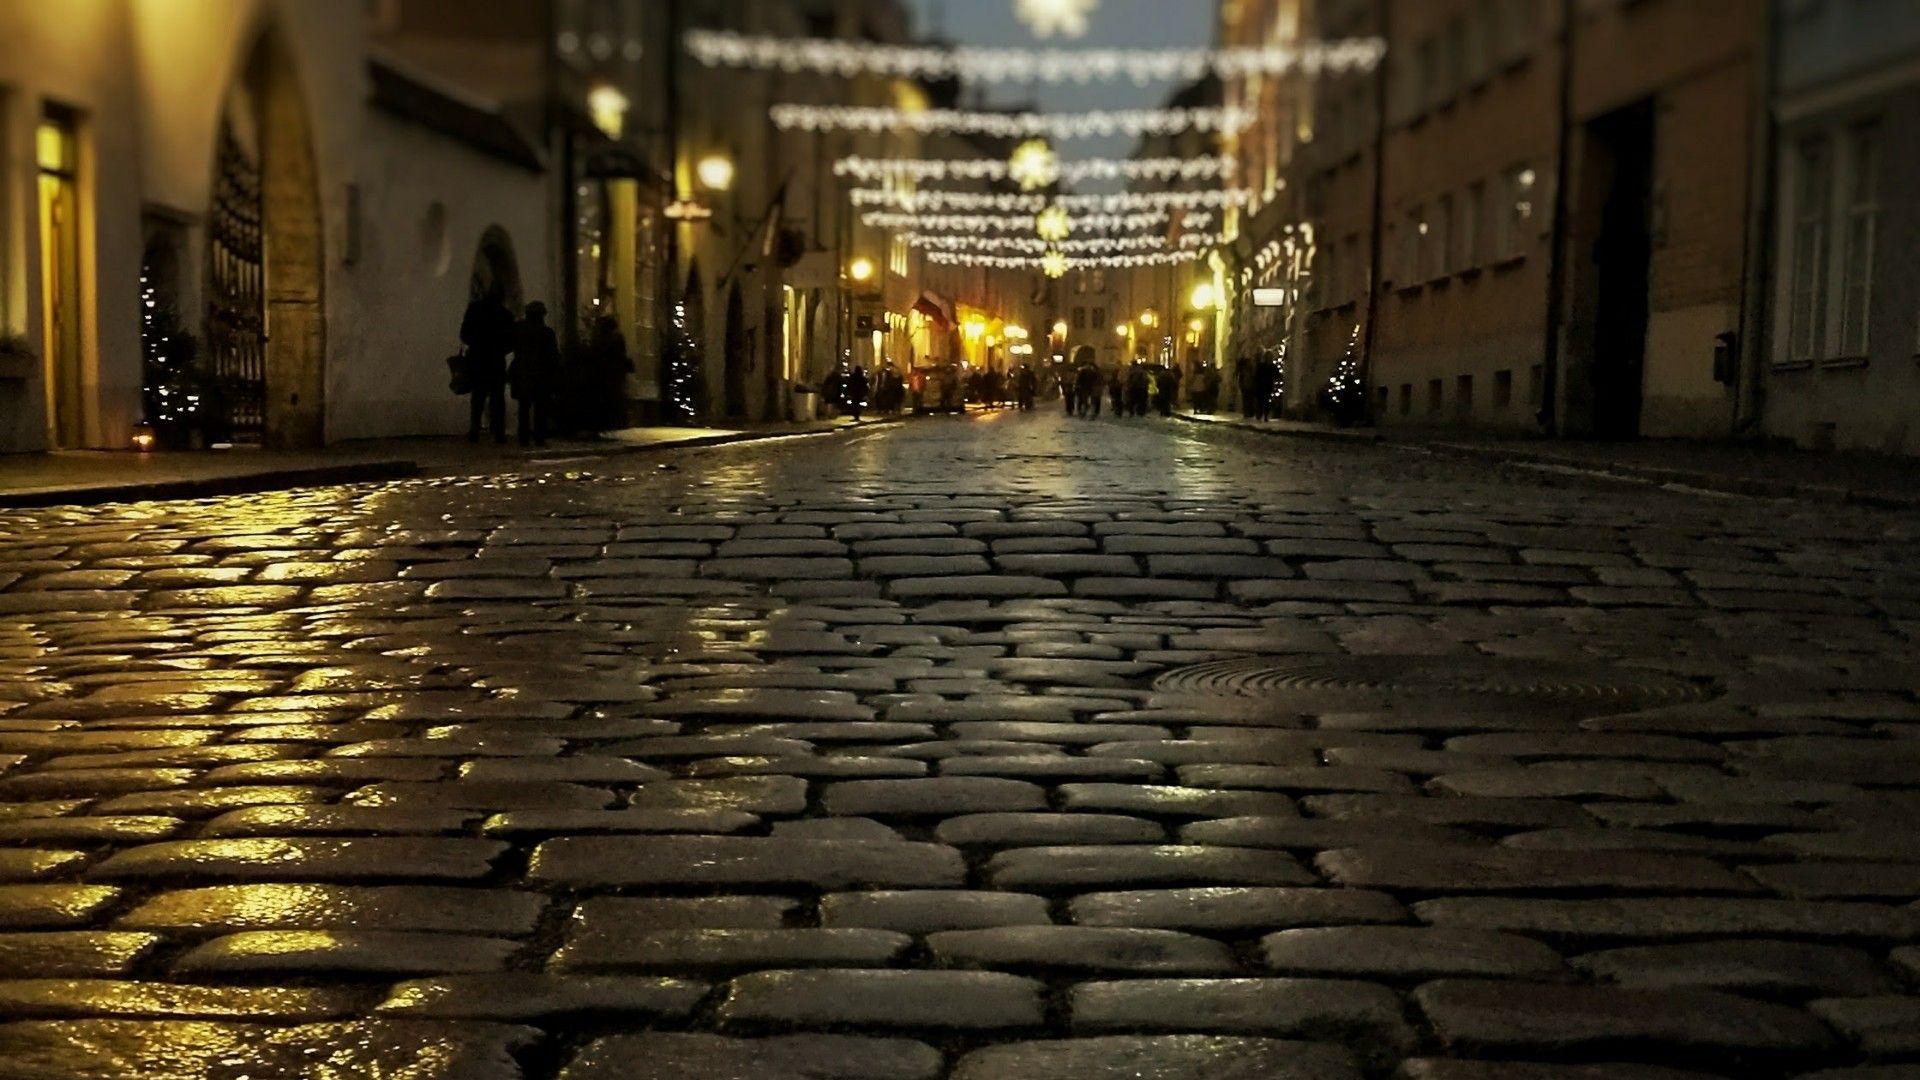 Night Street Of The Old Town Of Tallinn HD Wallpaper. Wallpaper